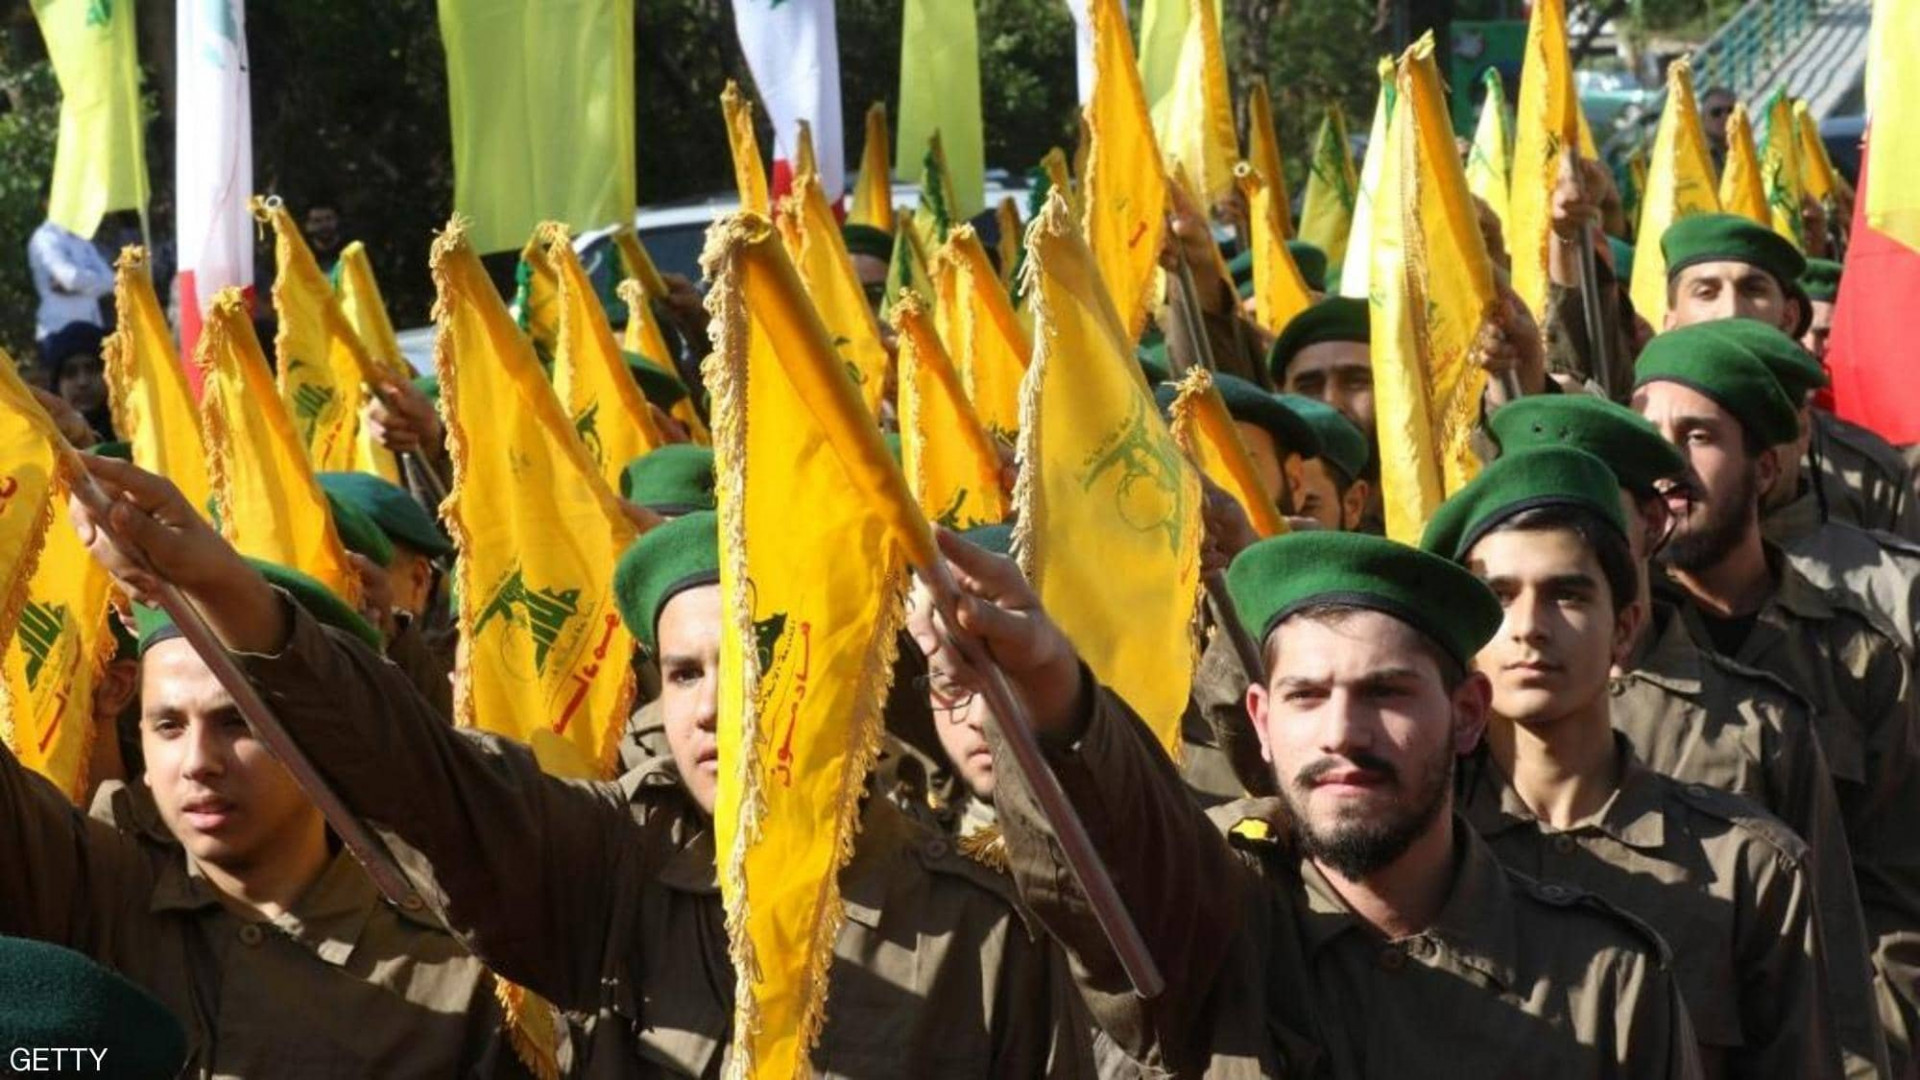 Lebanon's Hezbollah says fires rockets in response to Israeli air strikes